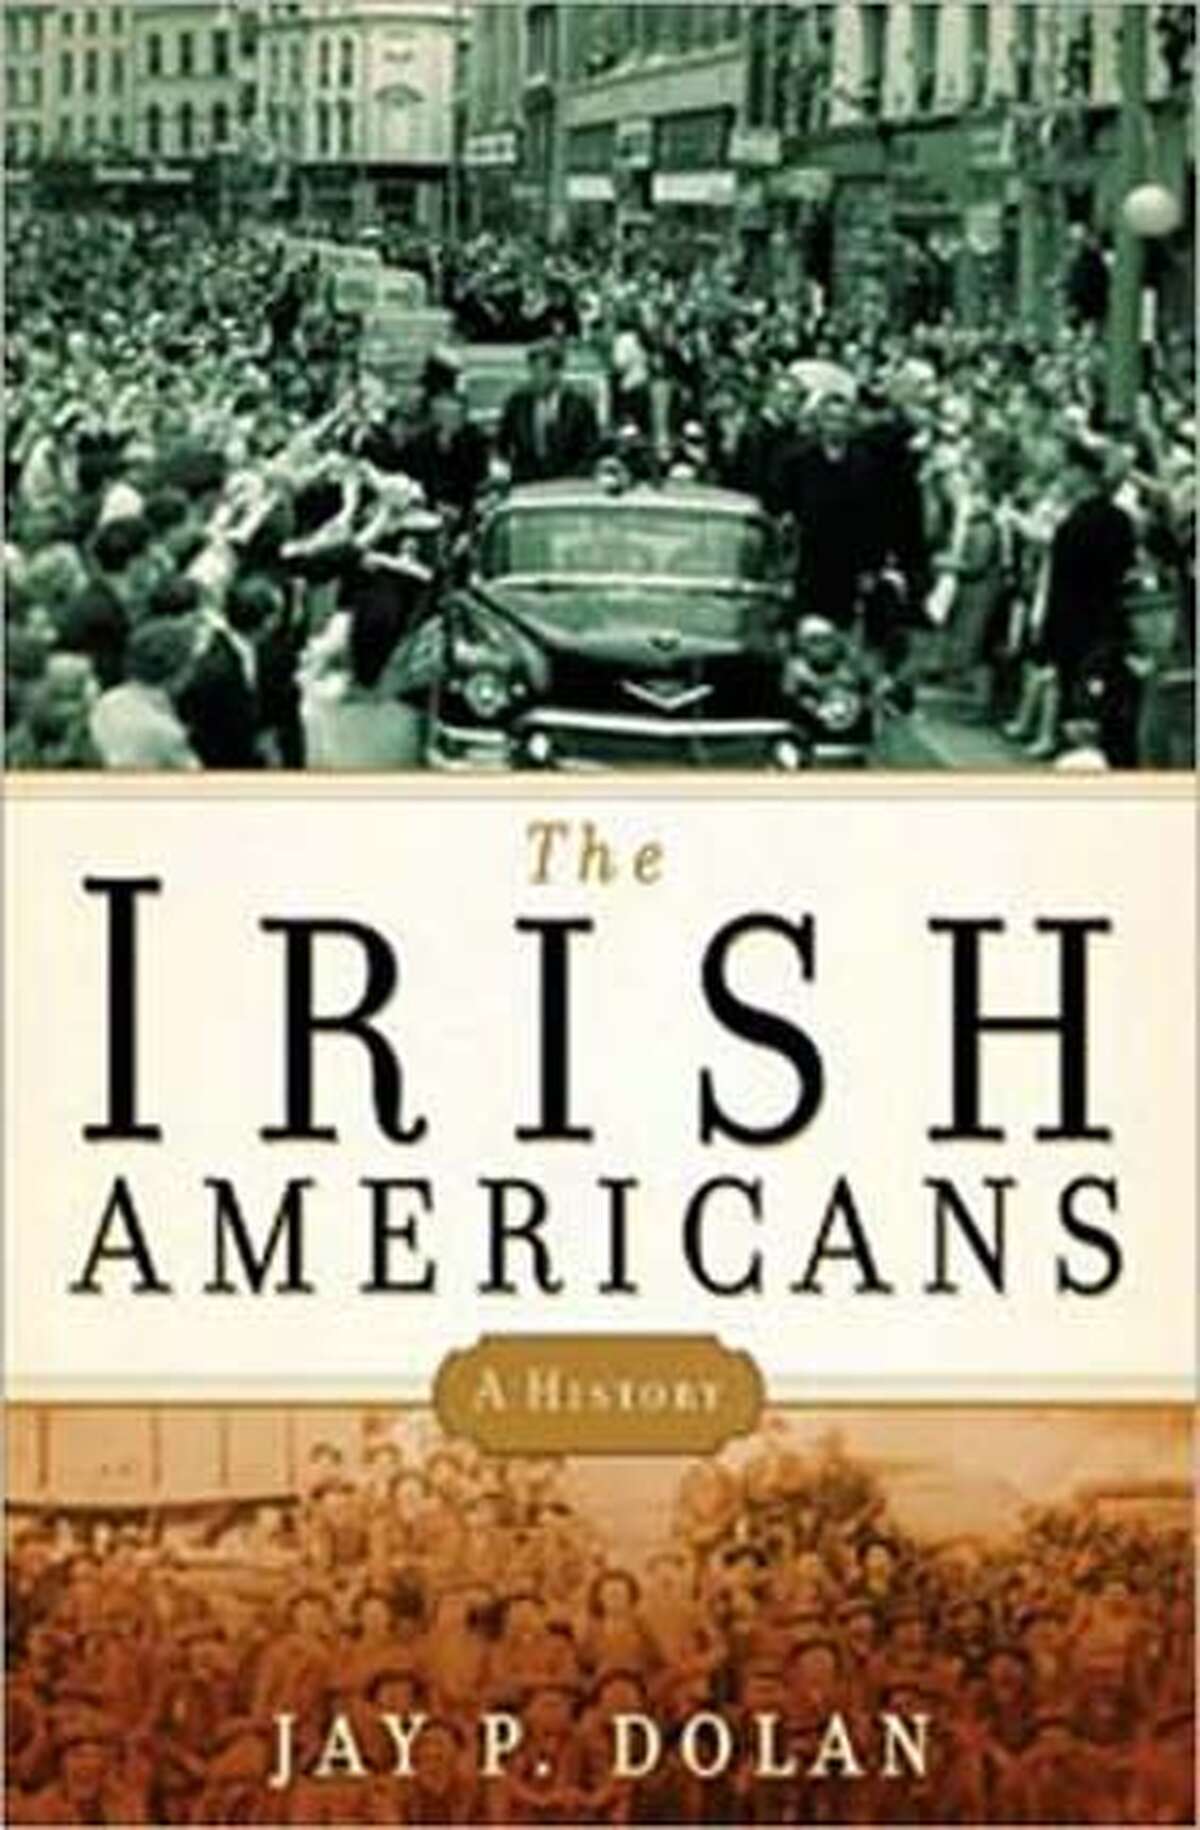 "The Irish Americans: A History" By Jay P. Dolan